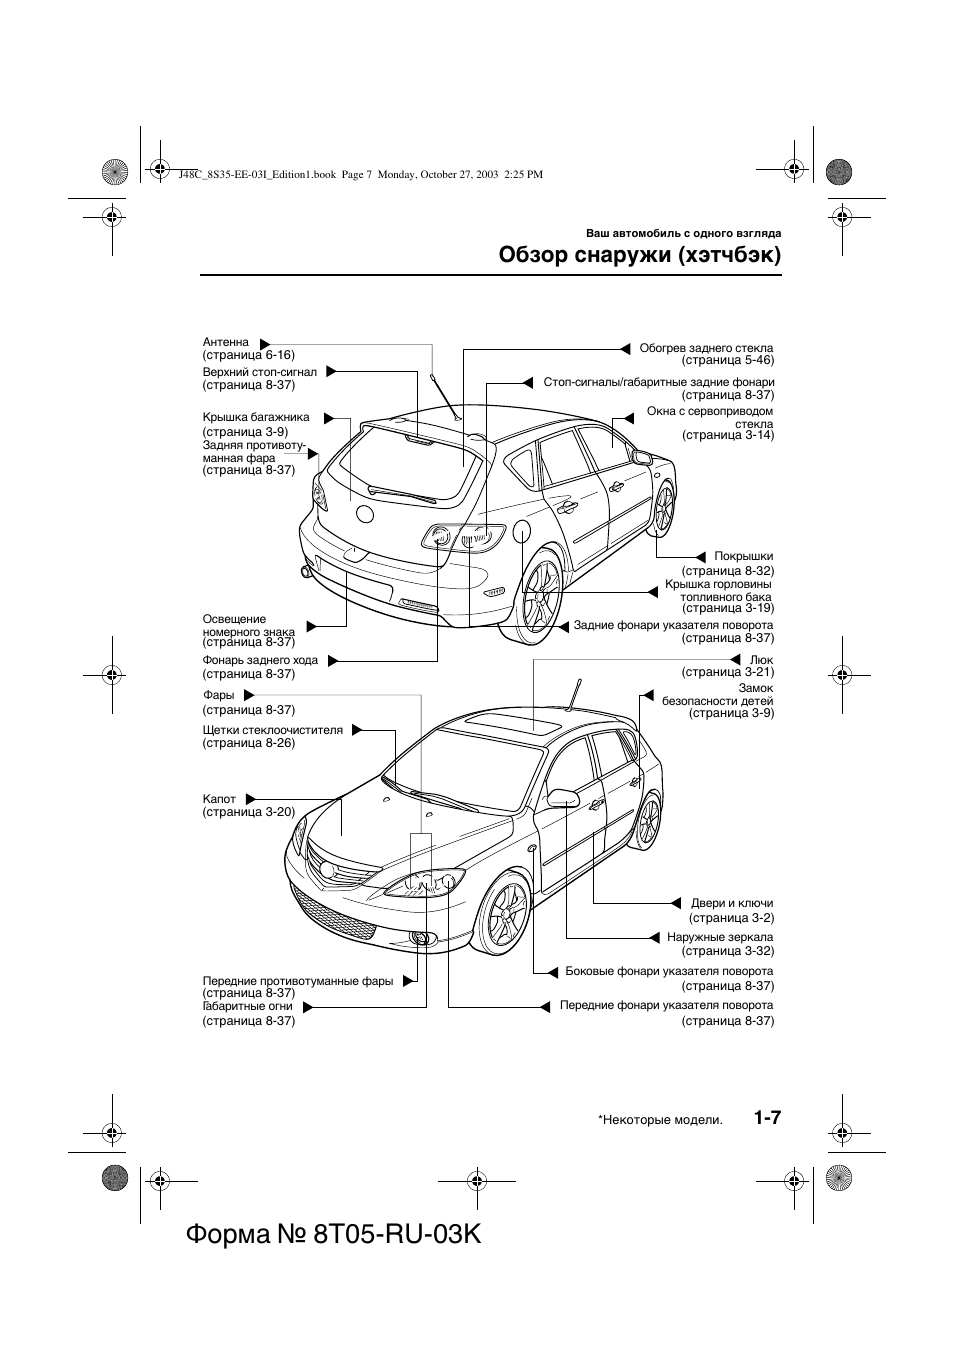 Руководство по эксплуатации Mazda 3